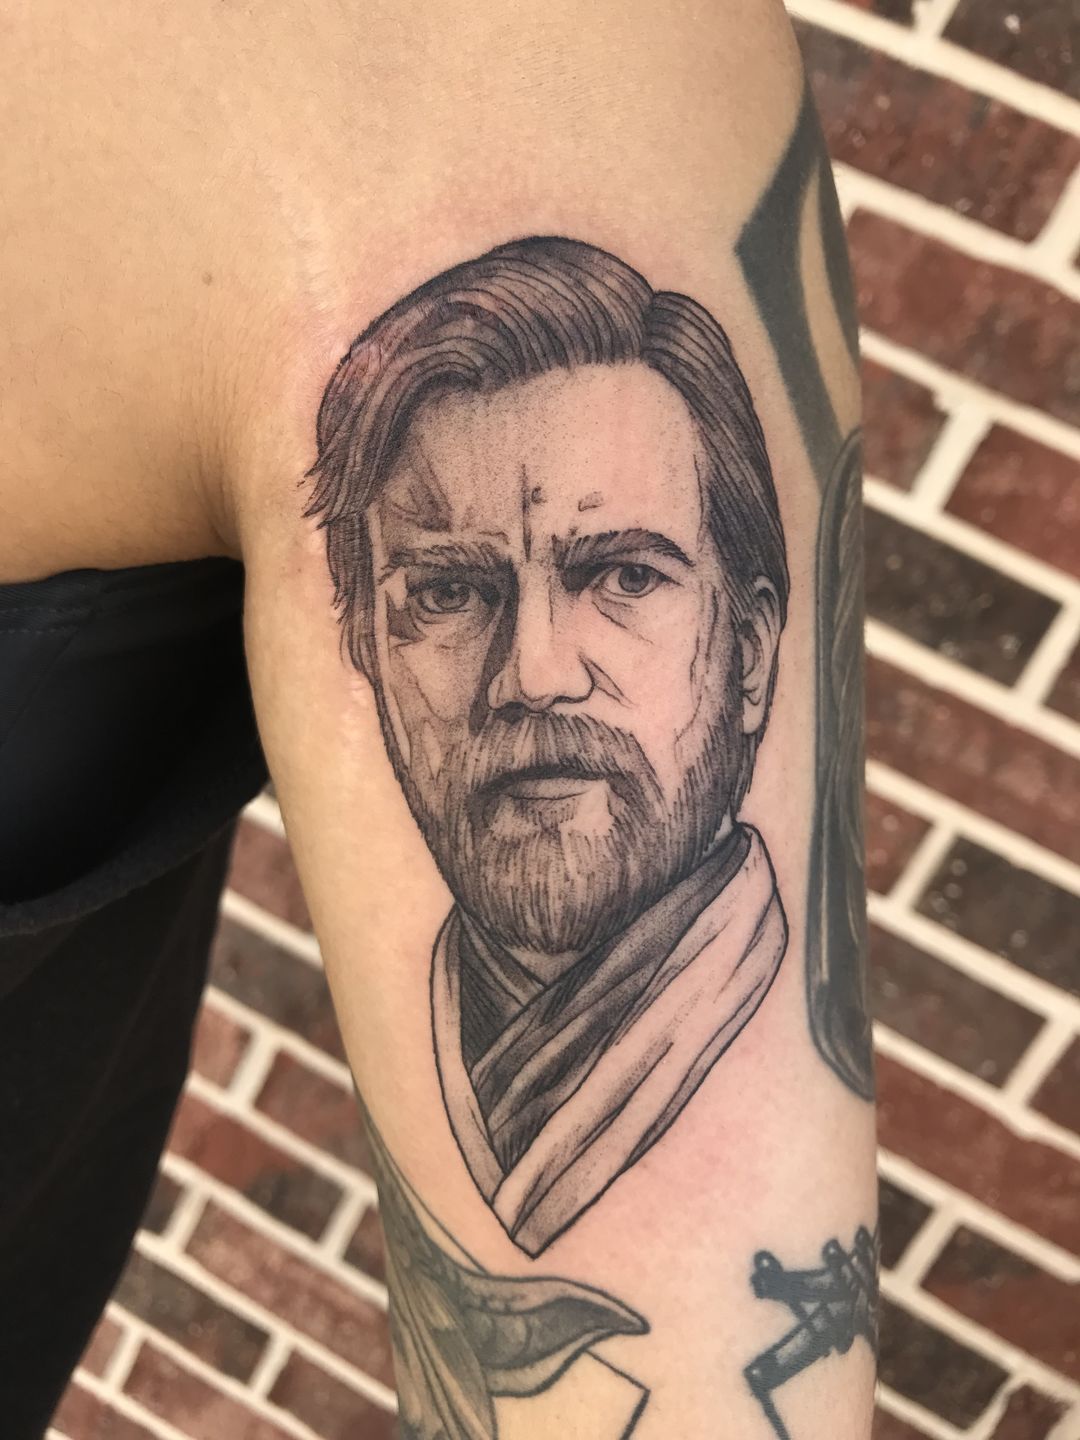 Anakin Skywalker with Nelvaan Tattoos by atomicartwork on DeviantArt